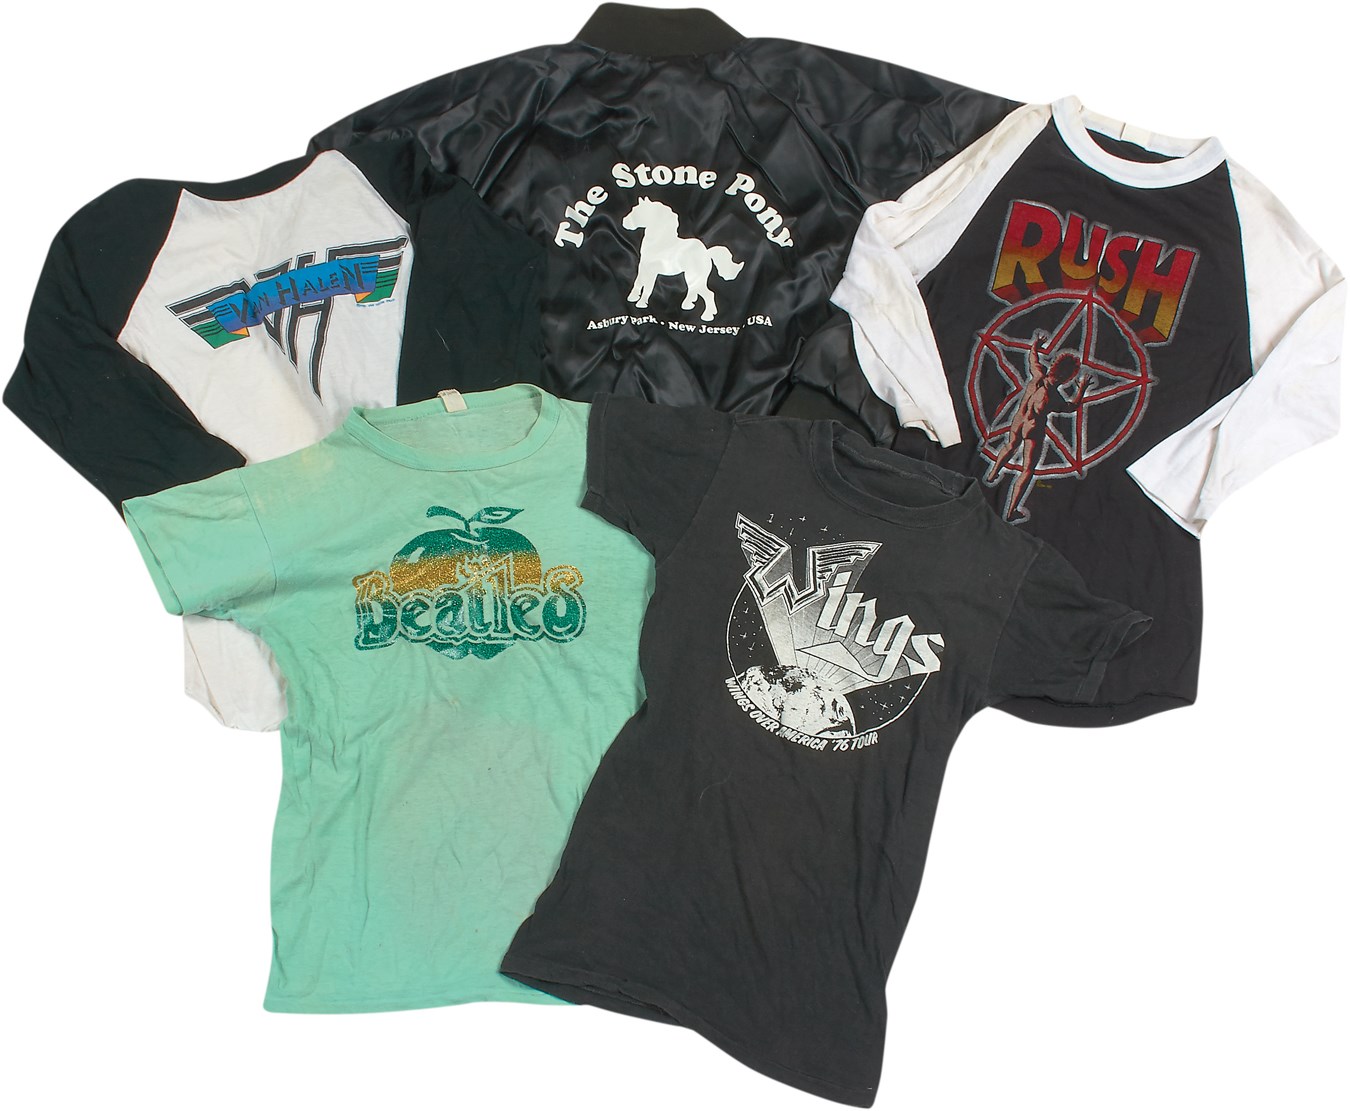 Rock 'N' Roll - 1970s Rock Concert T-Shirts (5)